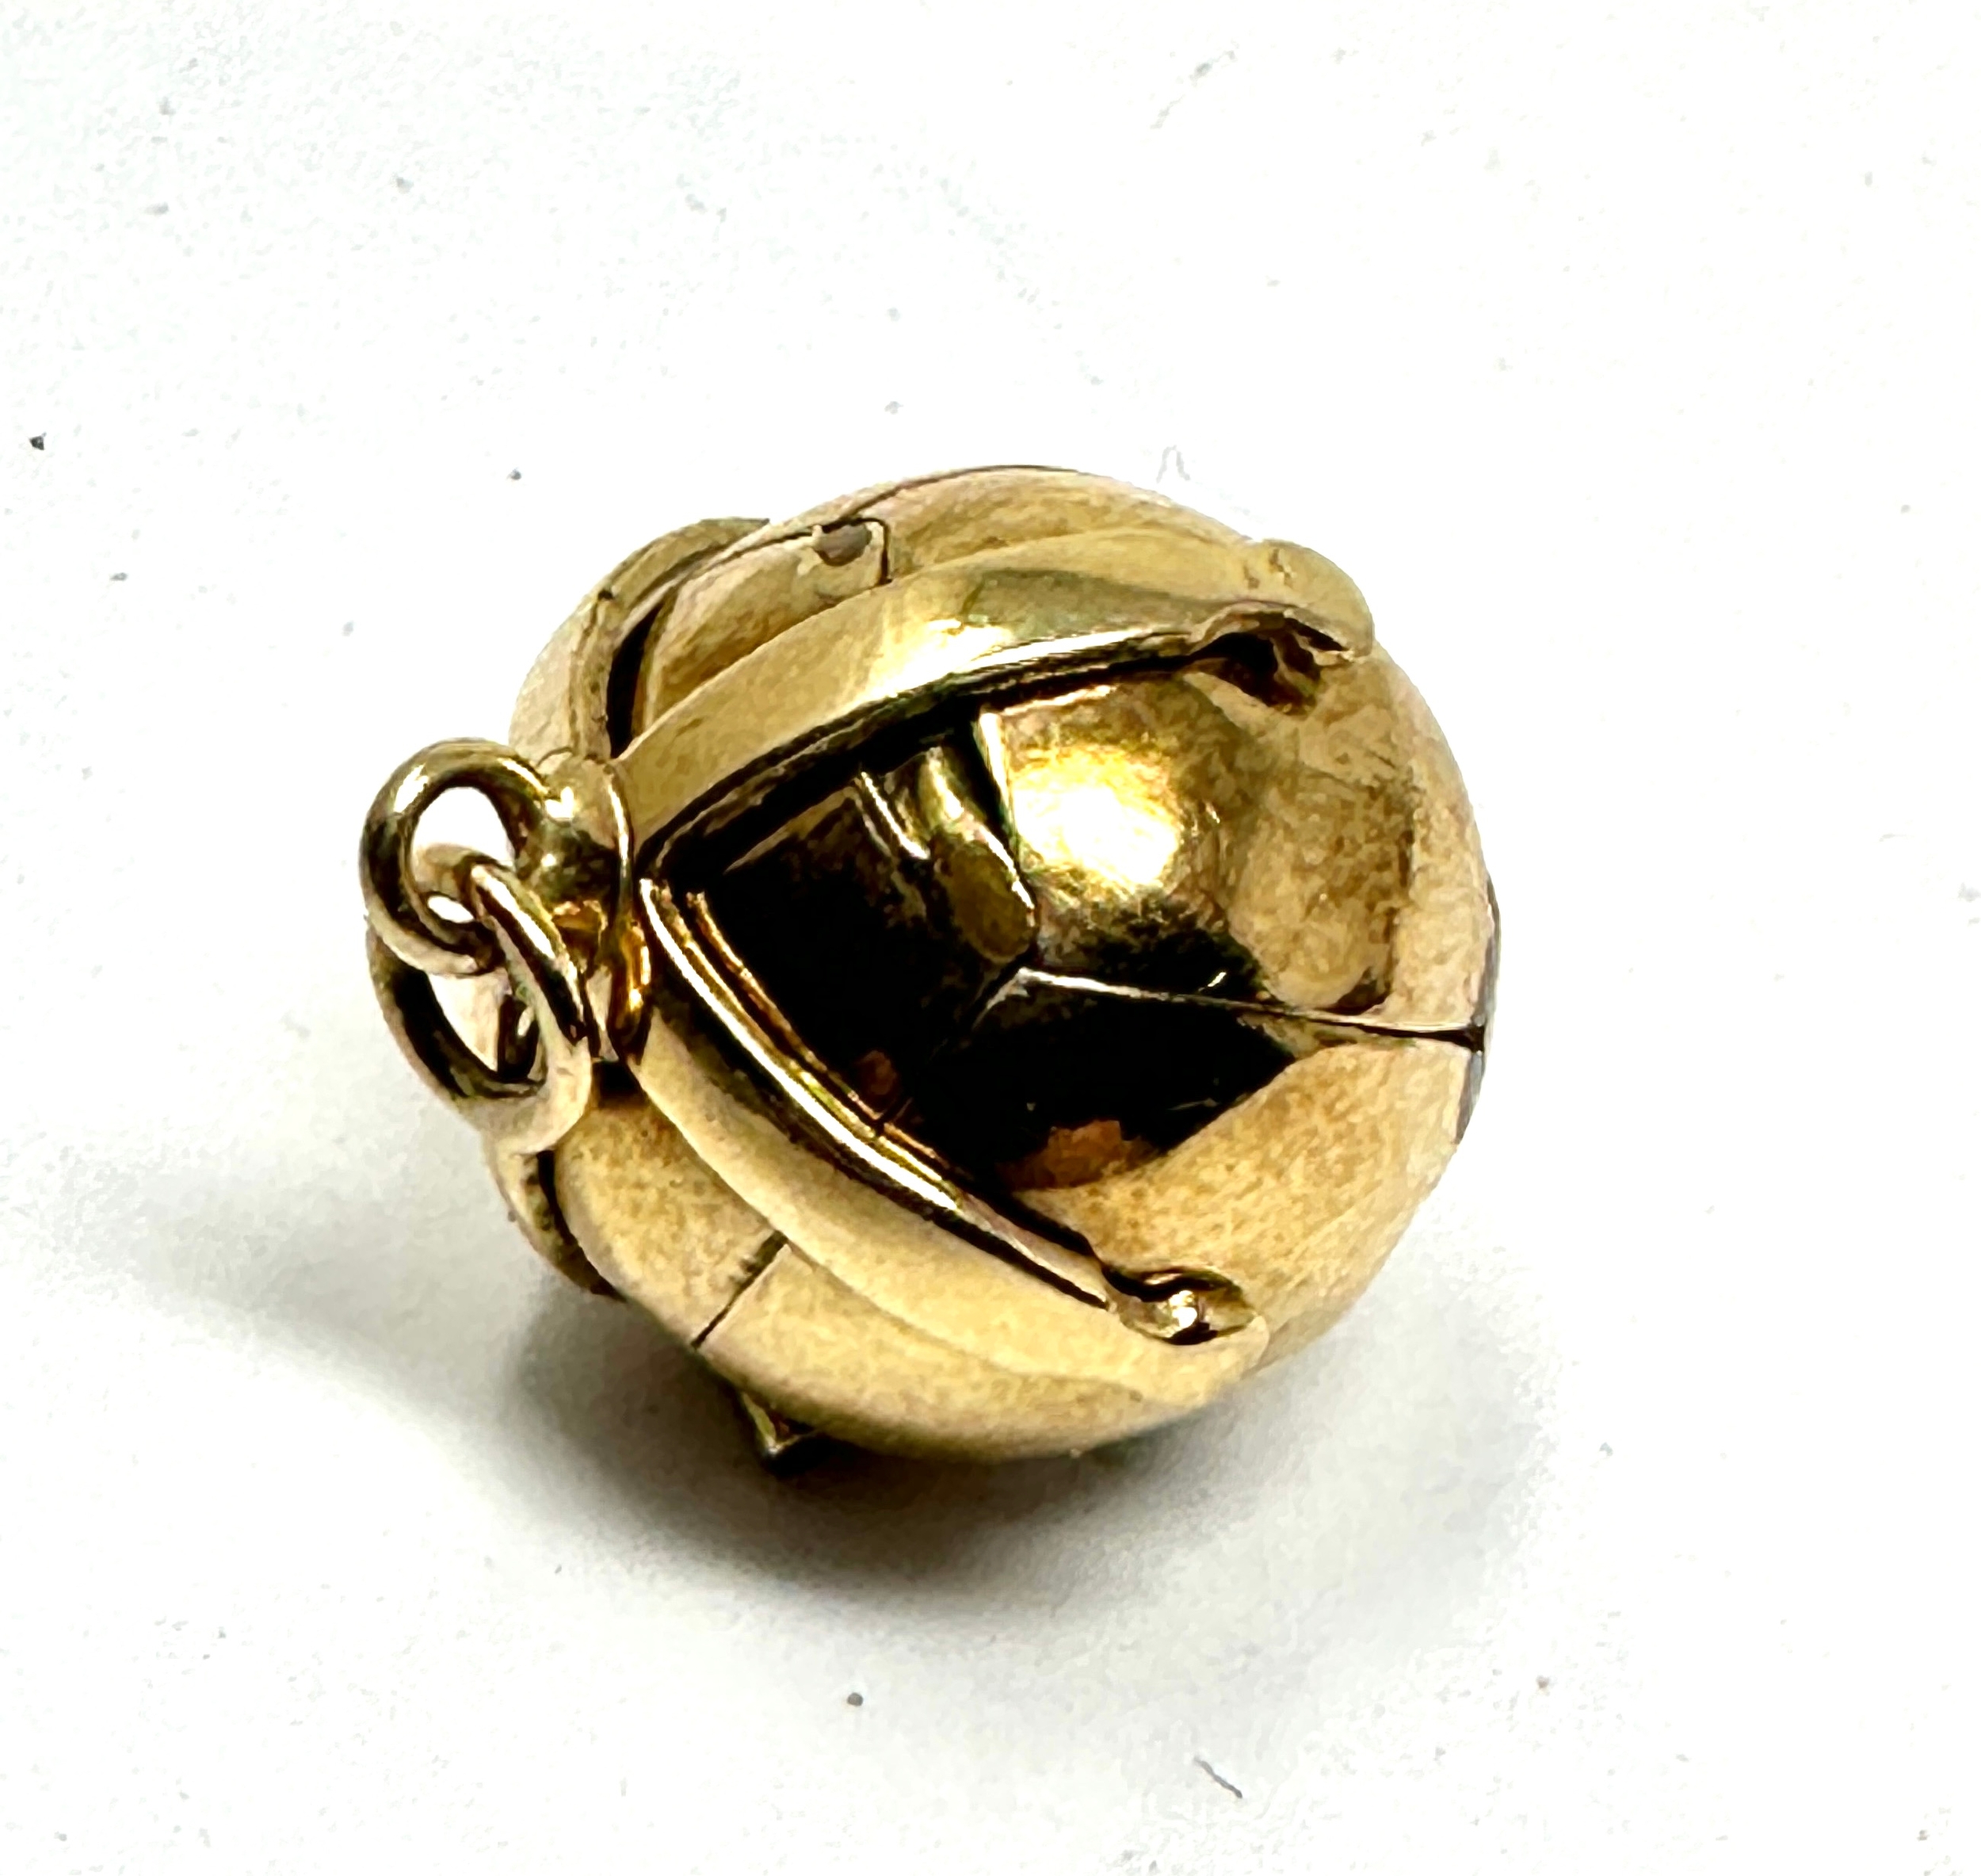 Gold & silver masonic ball pendant hallmarked 375 & silver hallmarks on interior weight 10.g - Image 5 of 6